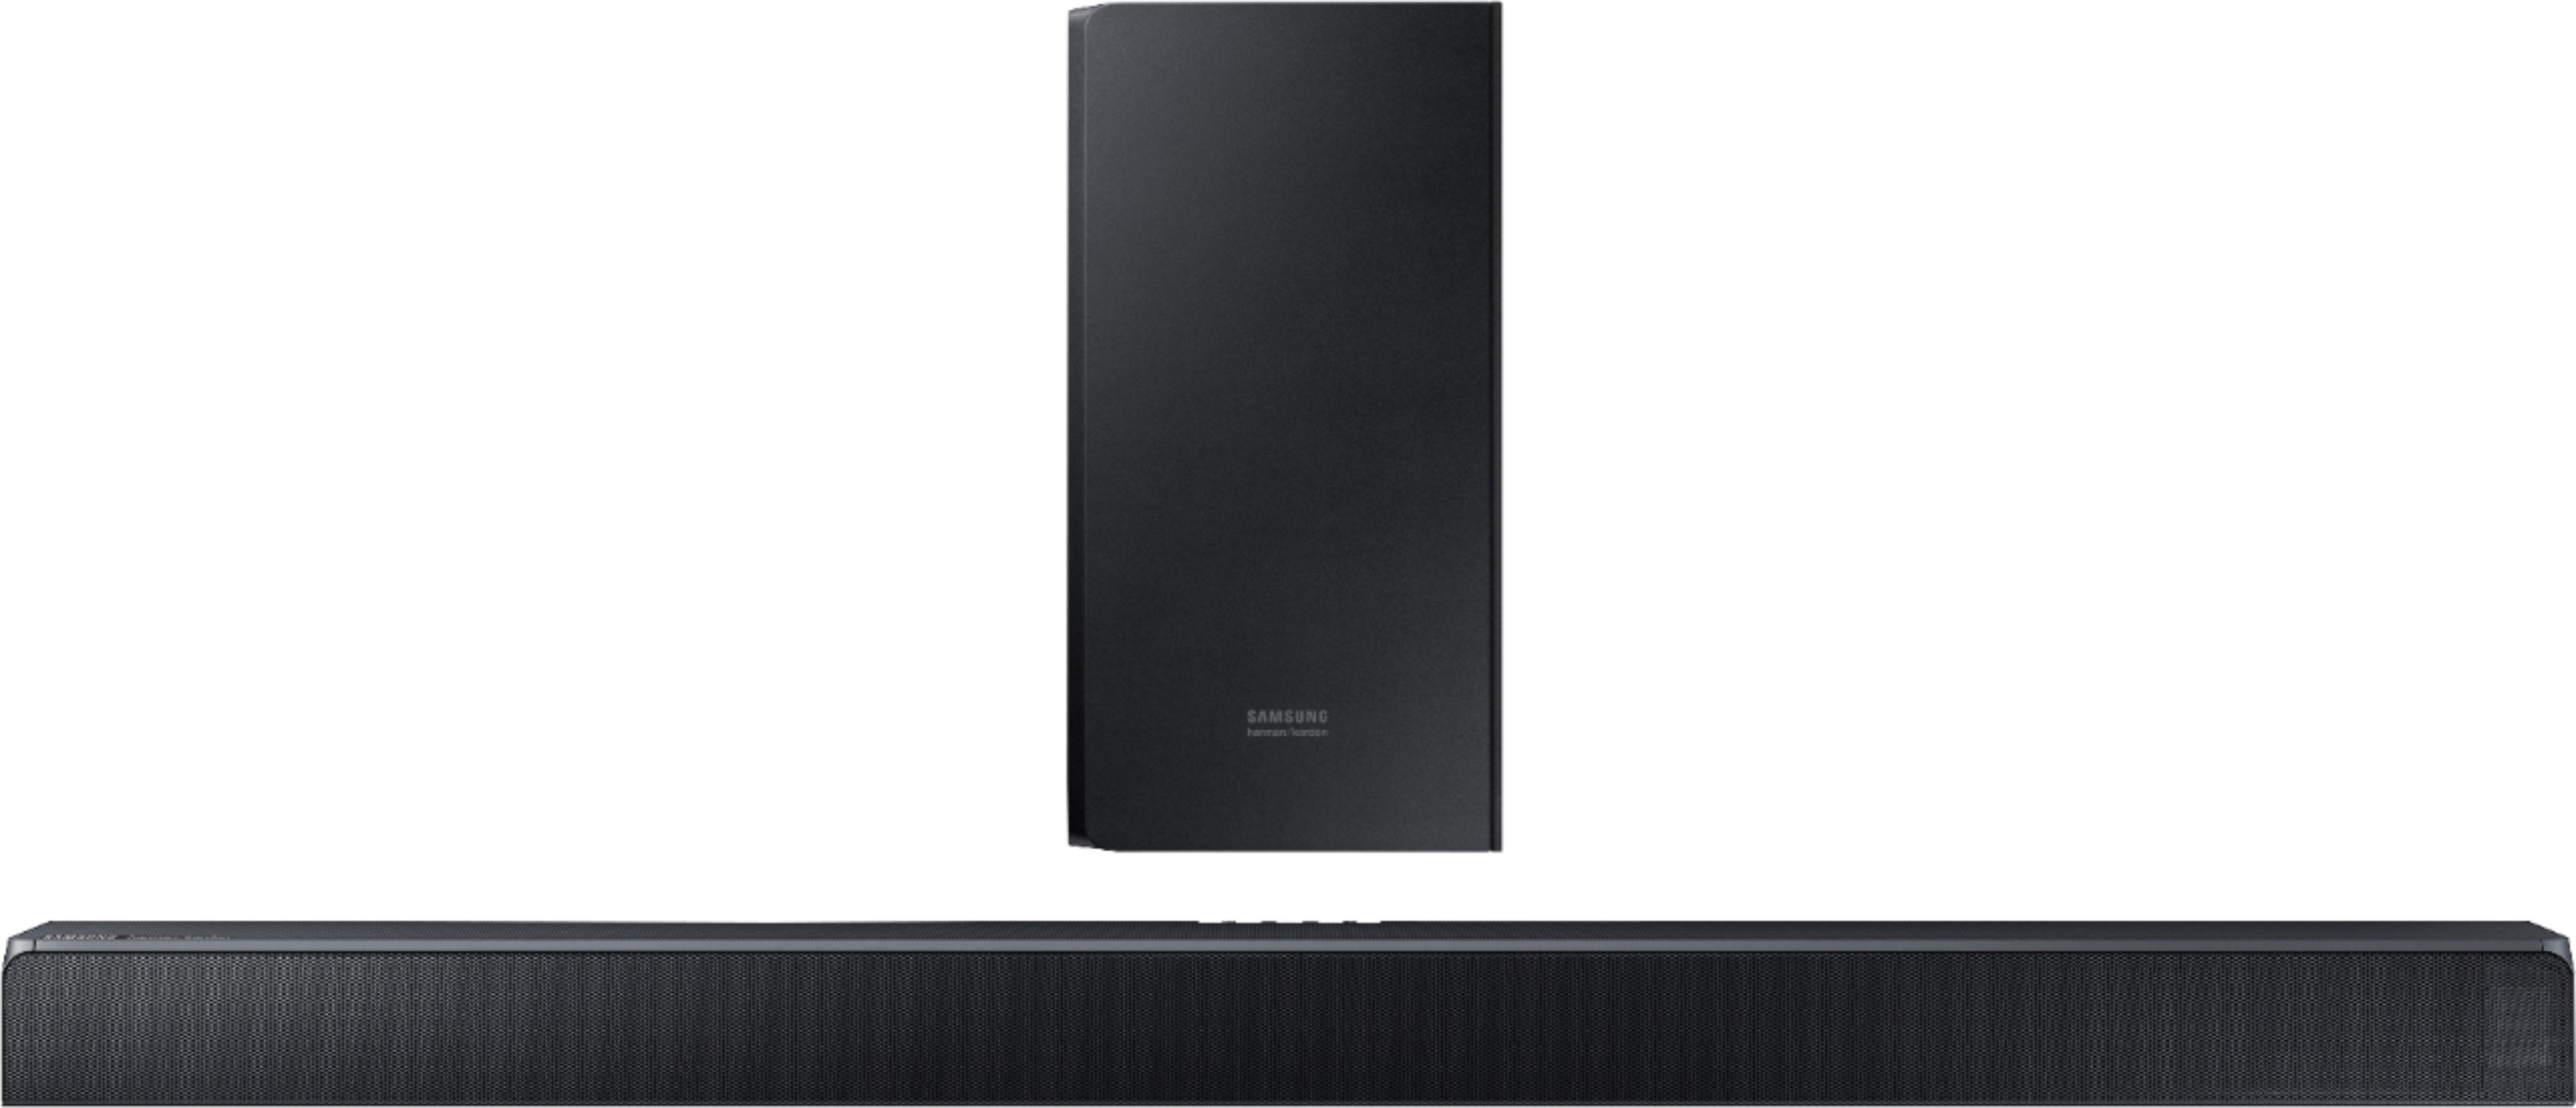 Best Buy: Samsung Harman Kardon Atmos Black HW-N850/ZA